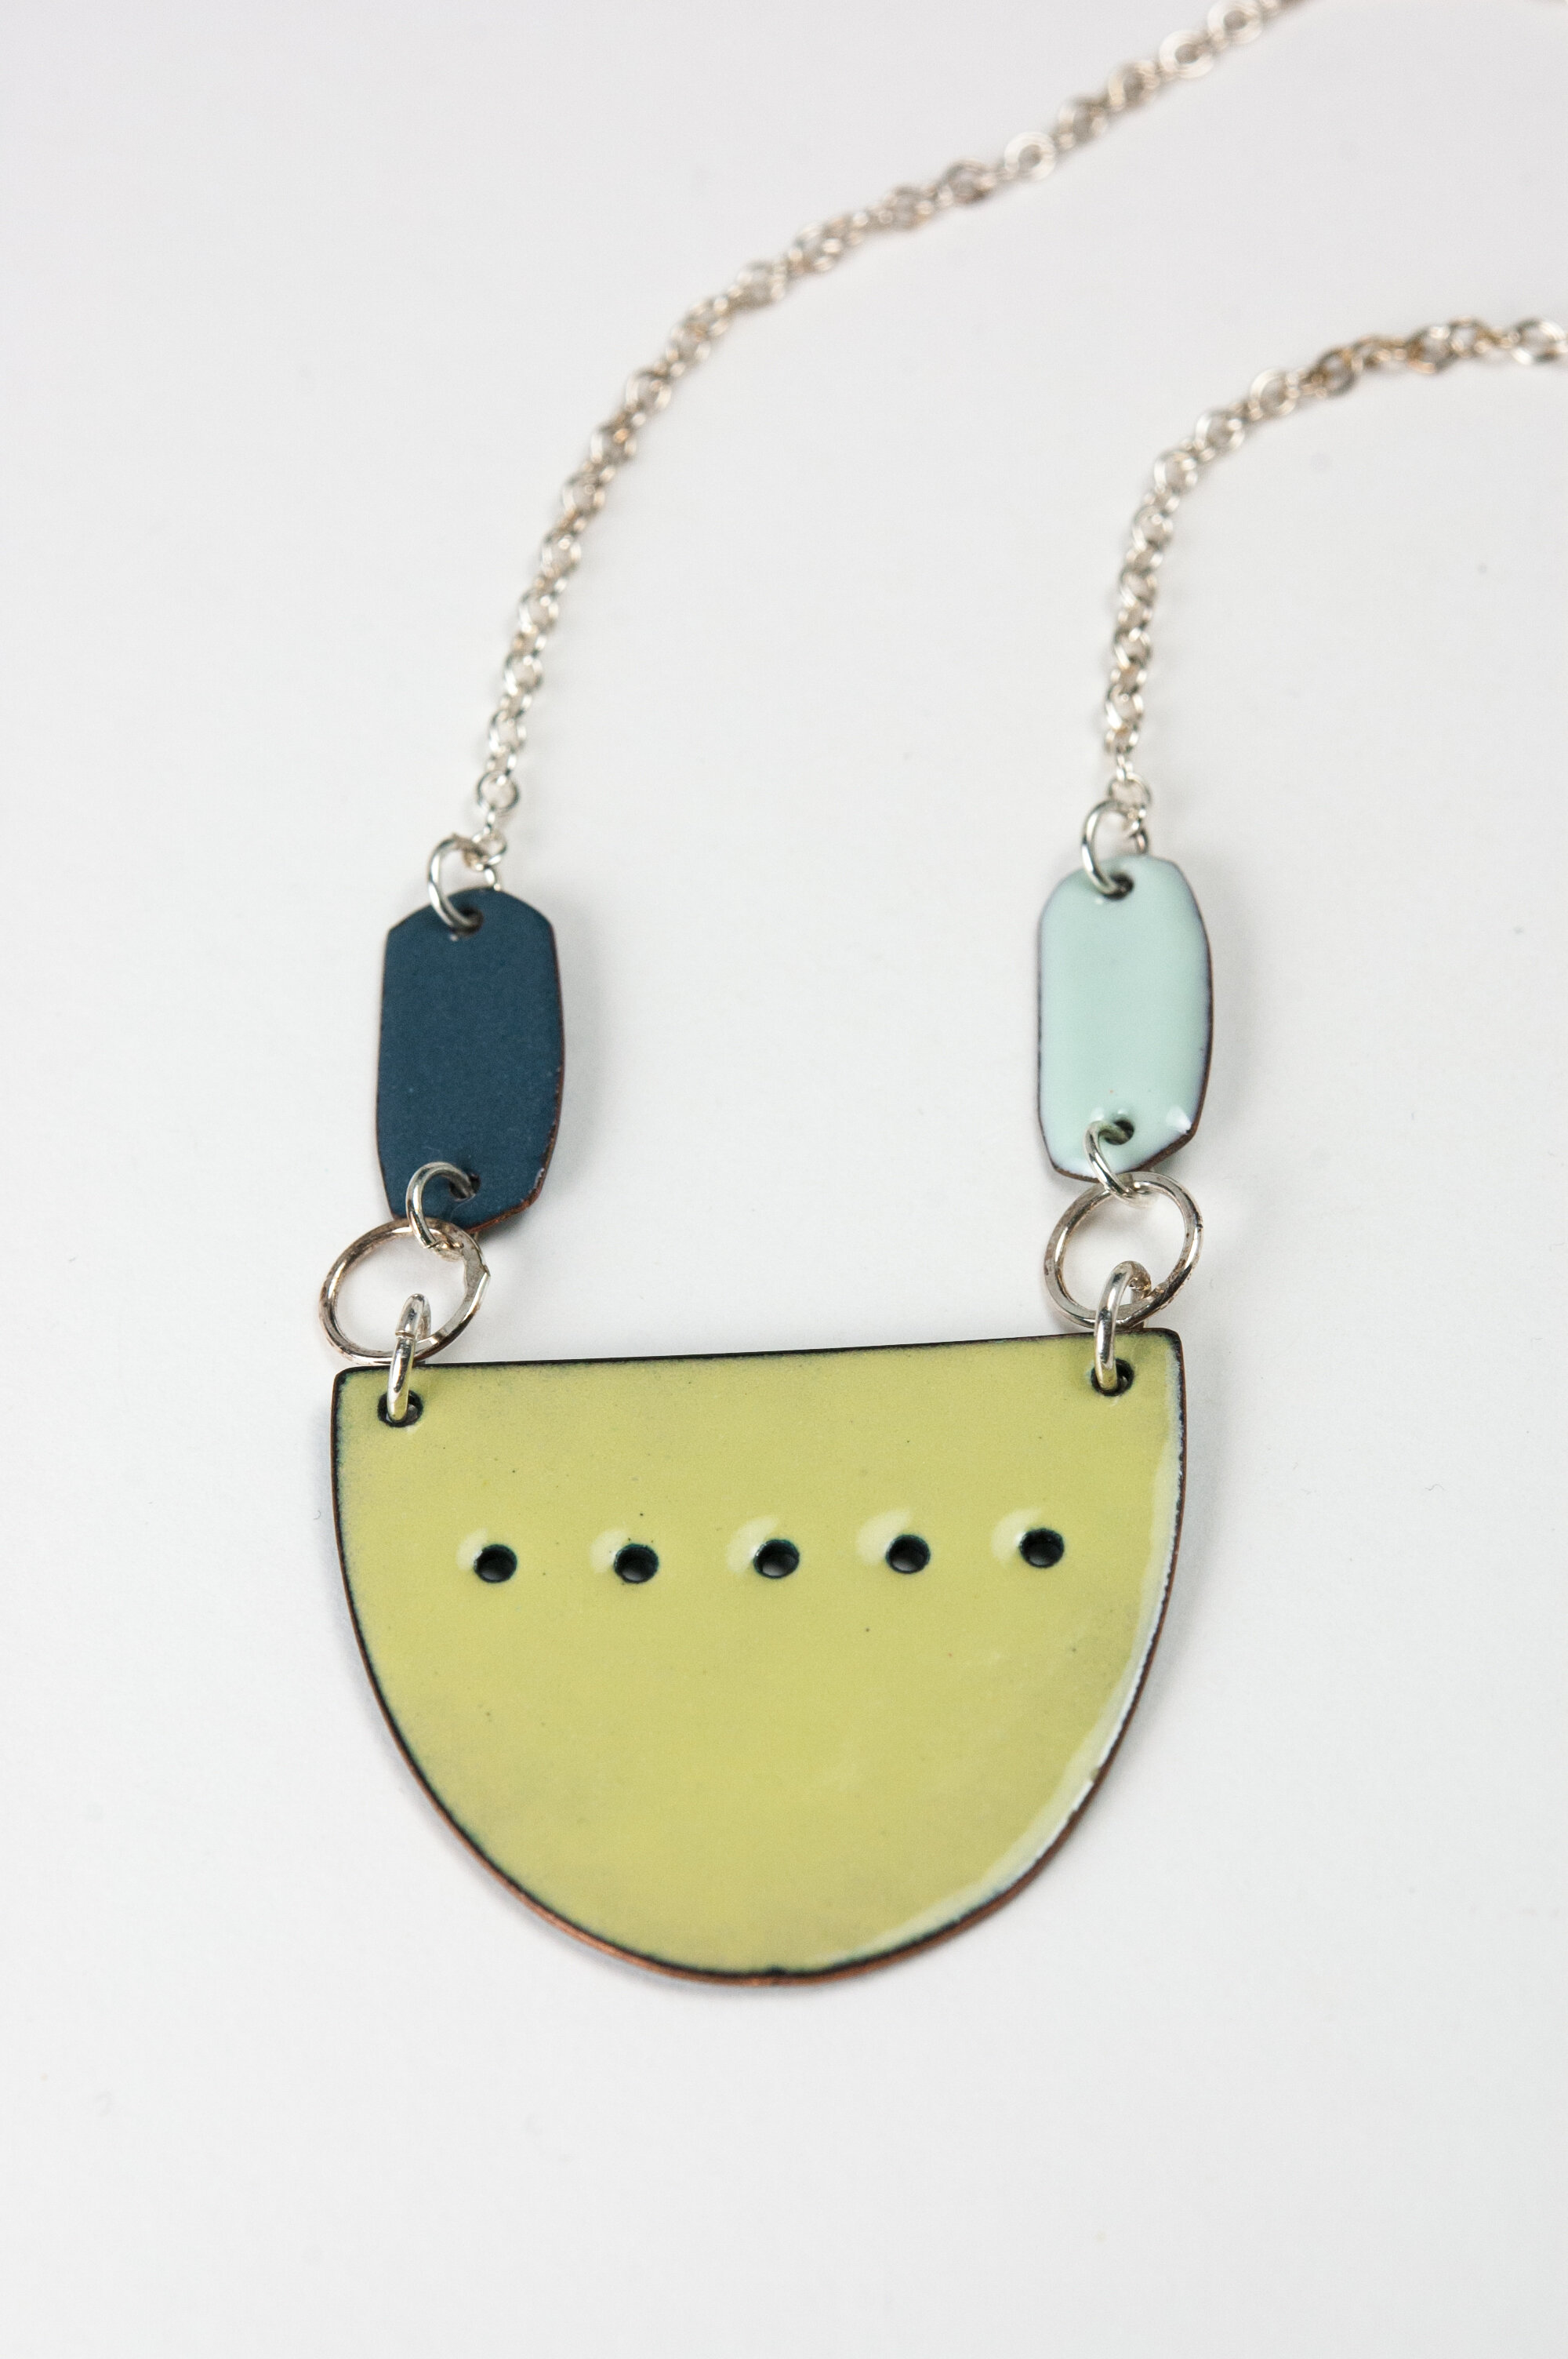 Reversible Color Lites Enamel Pendant in Turquoise and Lemon Yellow ...